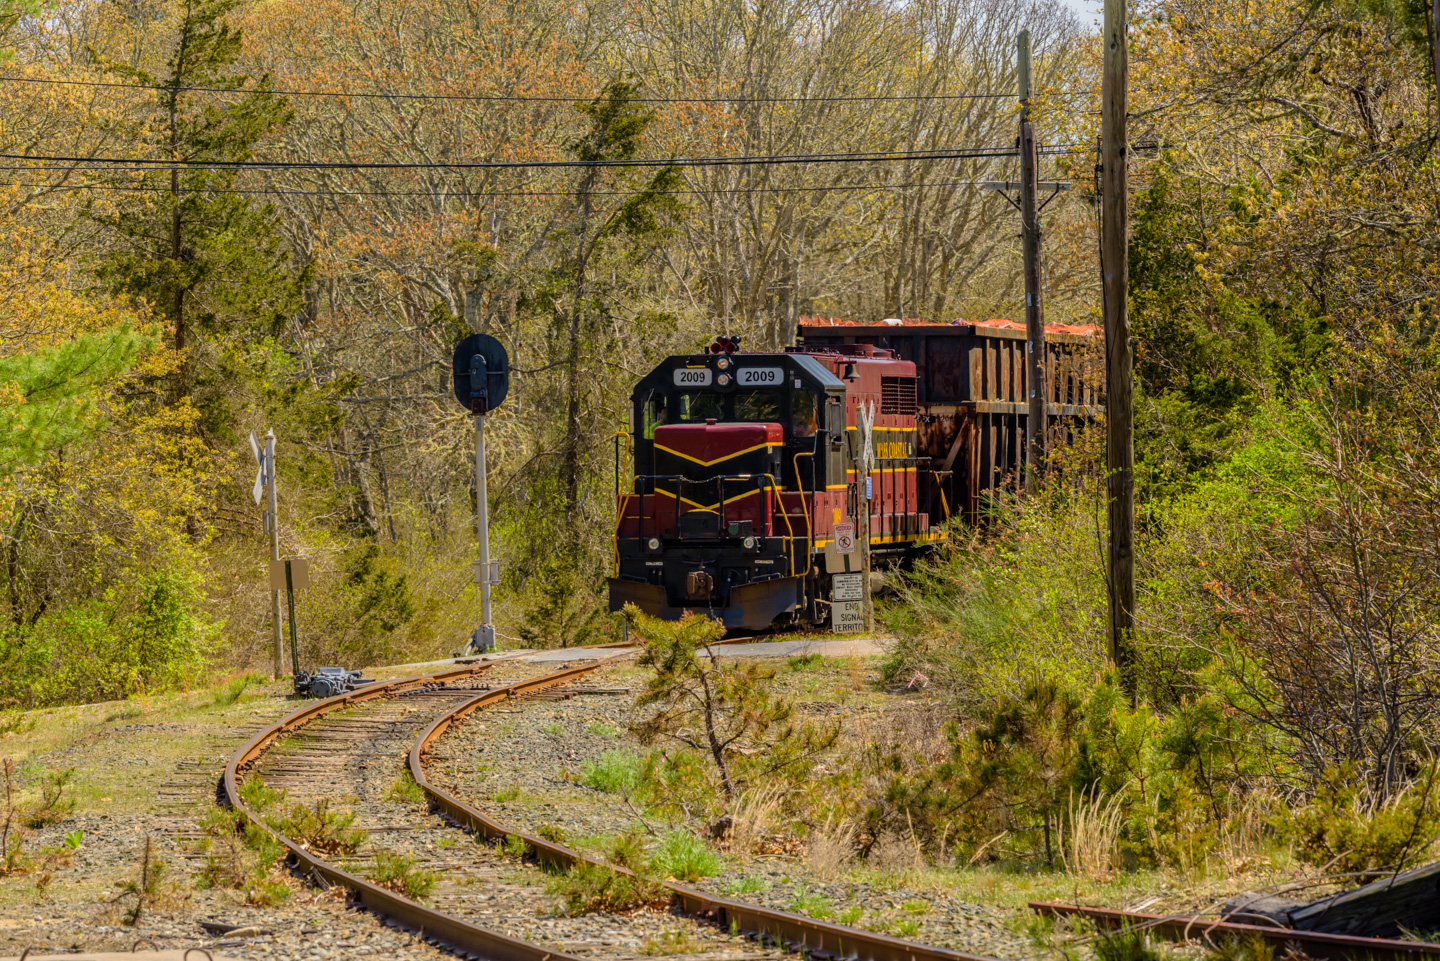 Train approaching the railroad bridge